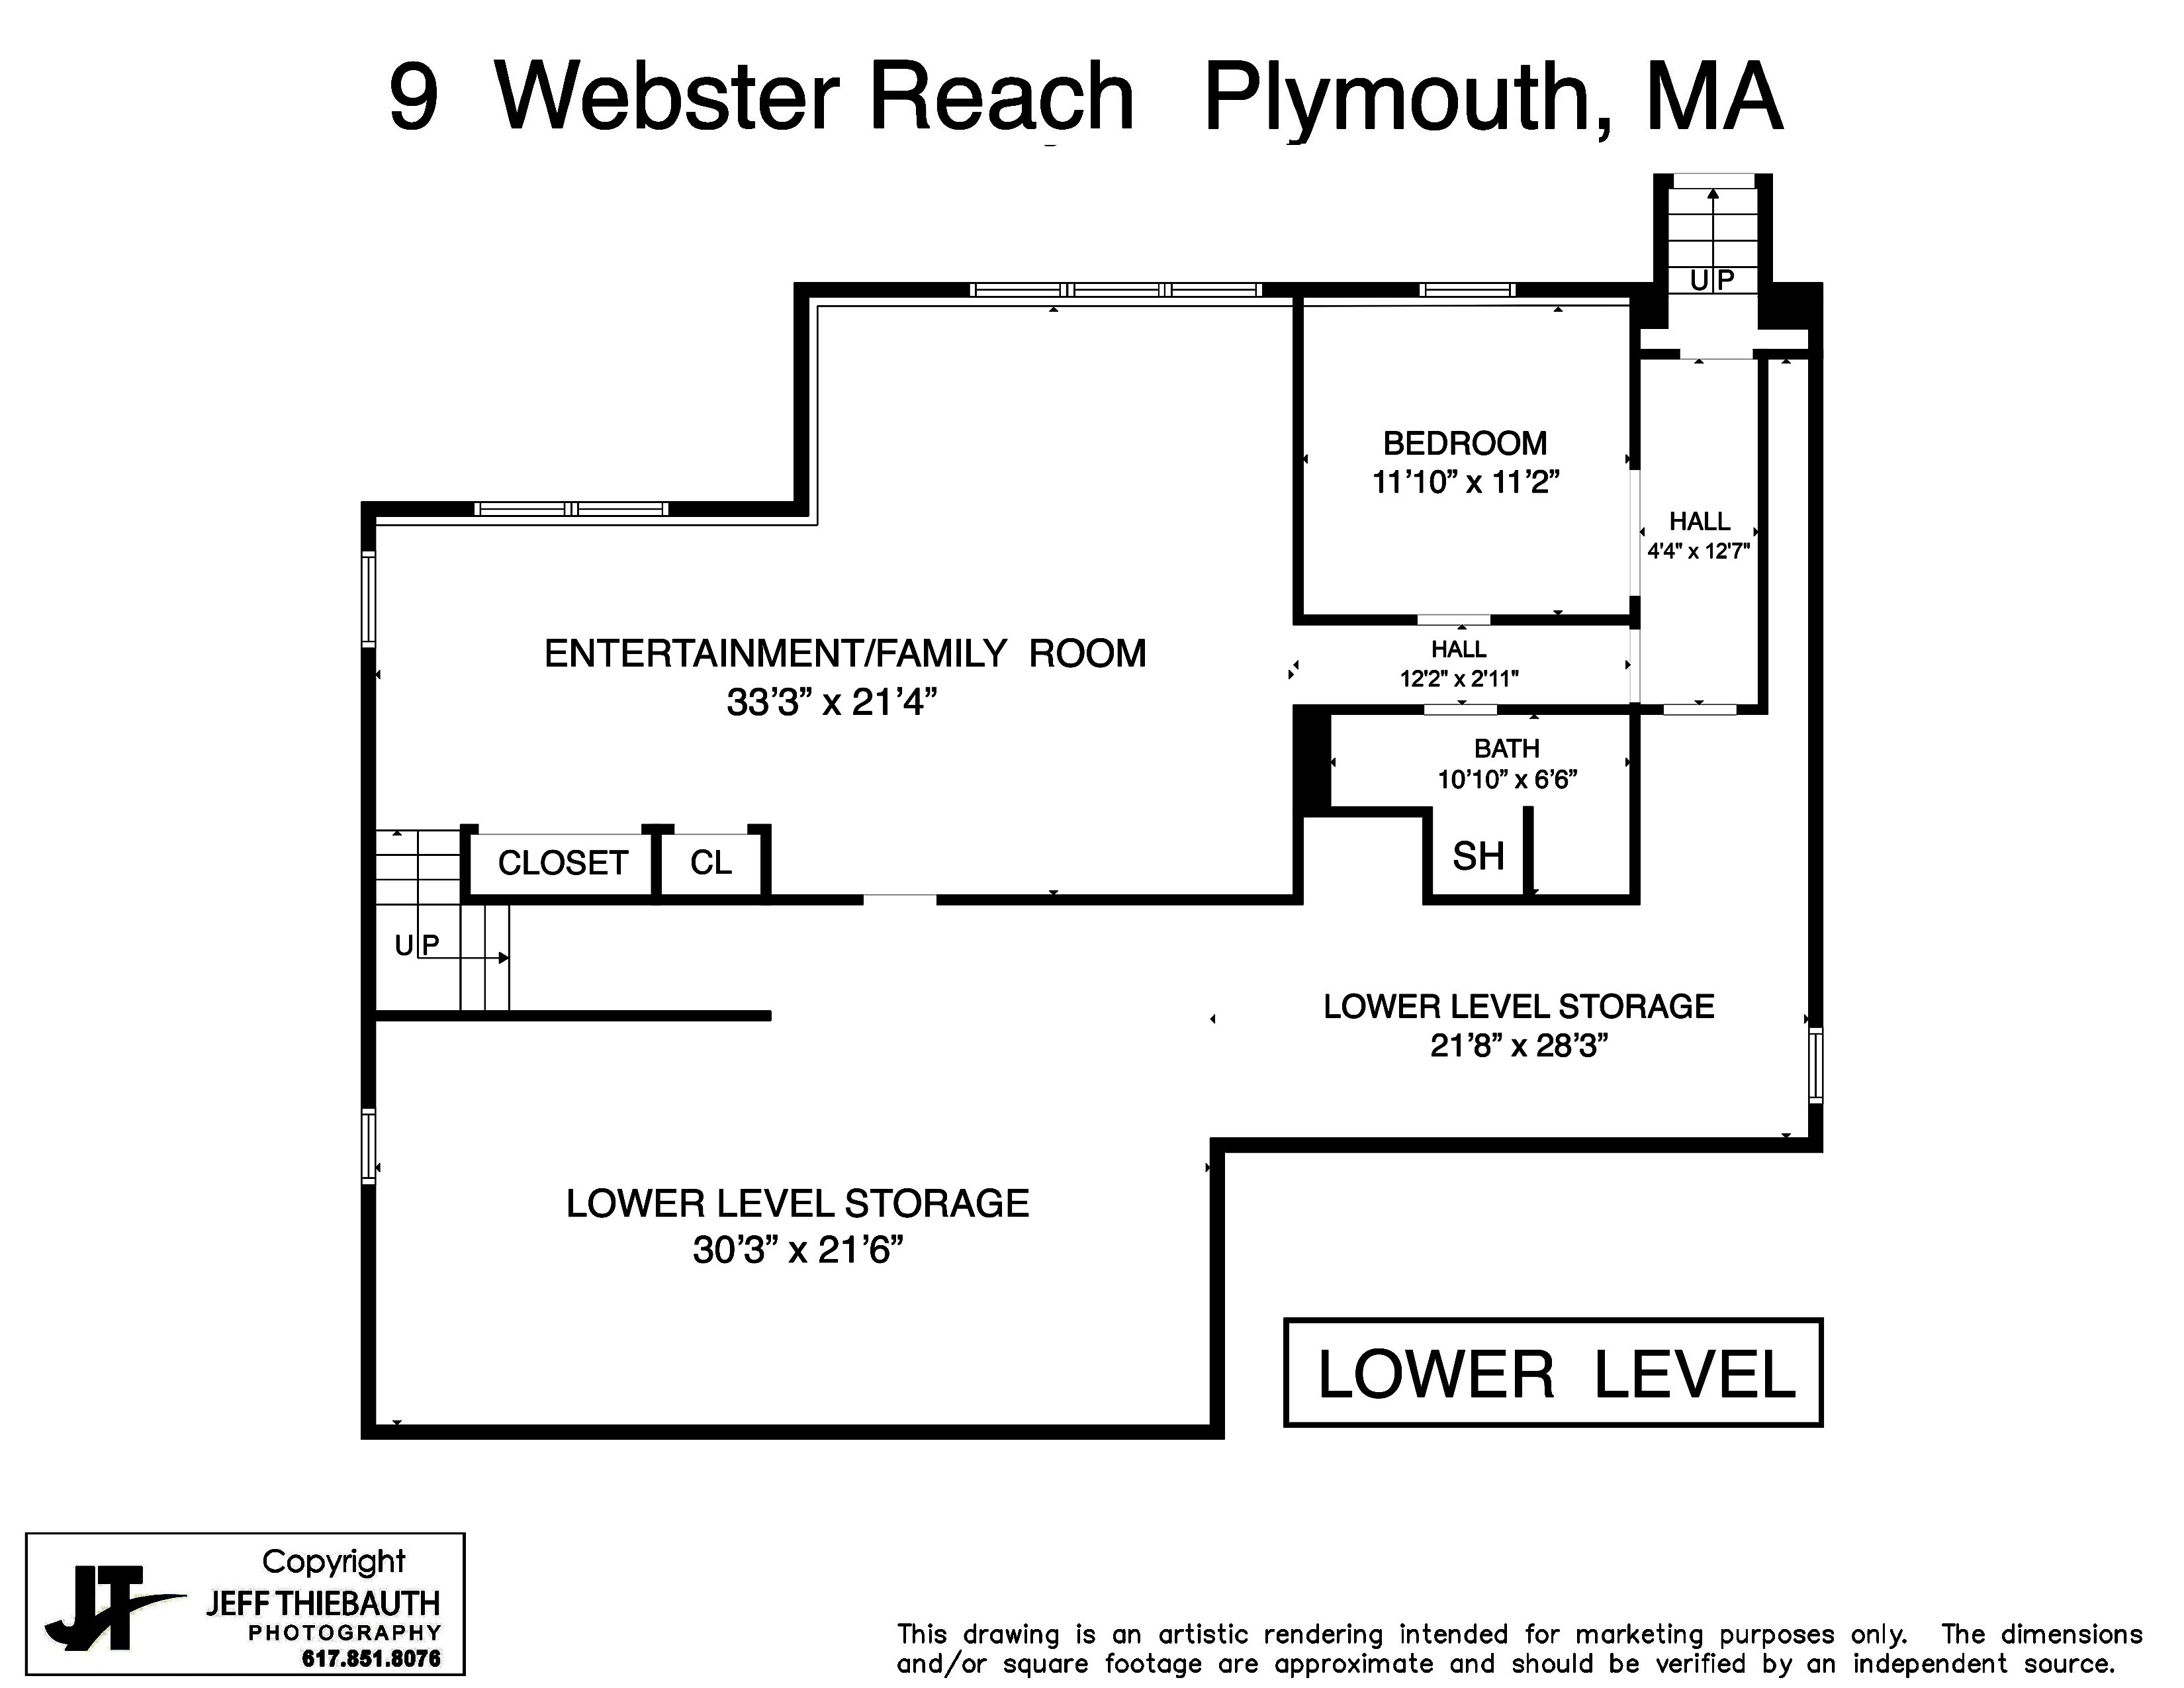 3. 9 Webster Reach, Plymouth, Ma 02360, Usa